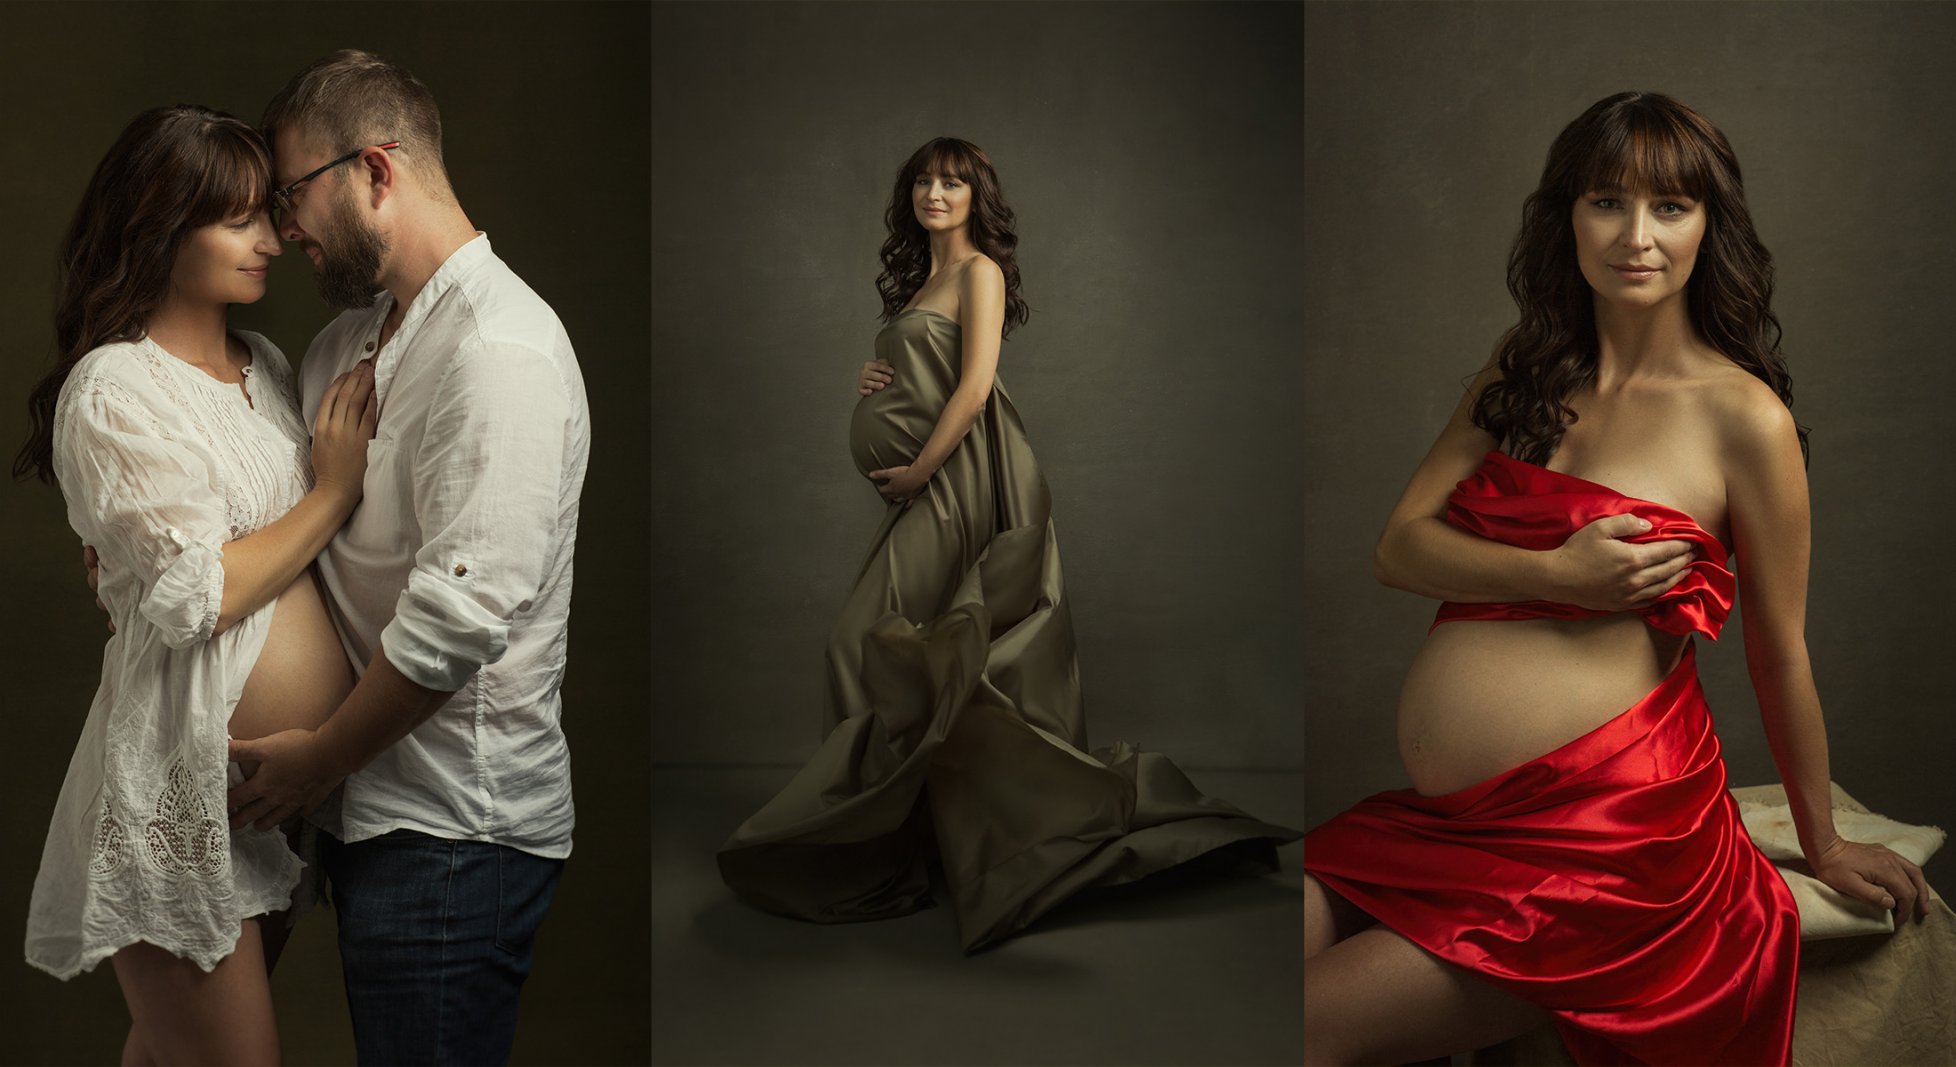 fotografovani tehotnych Plzen